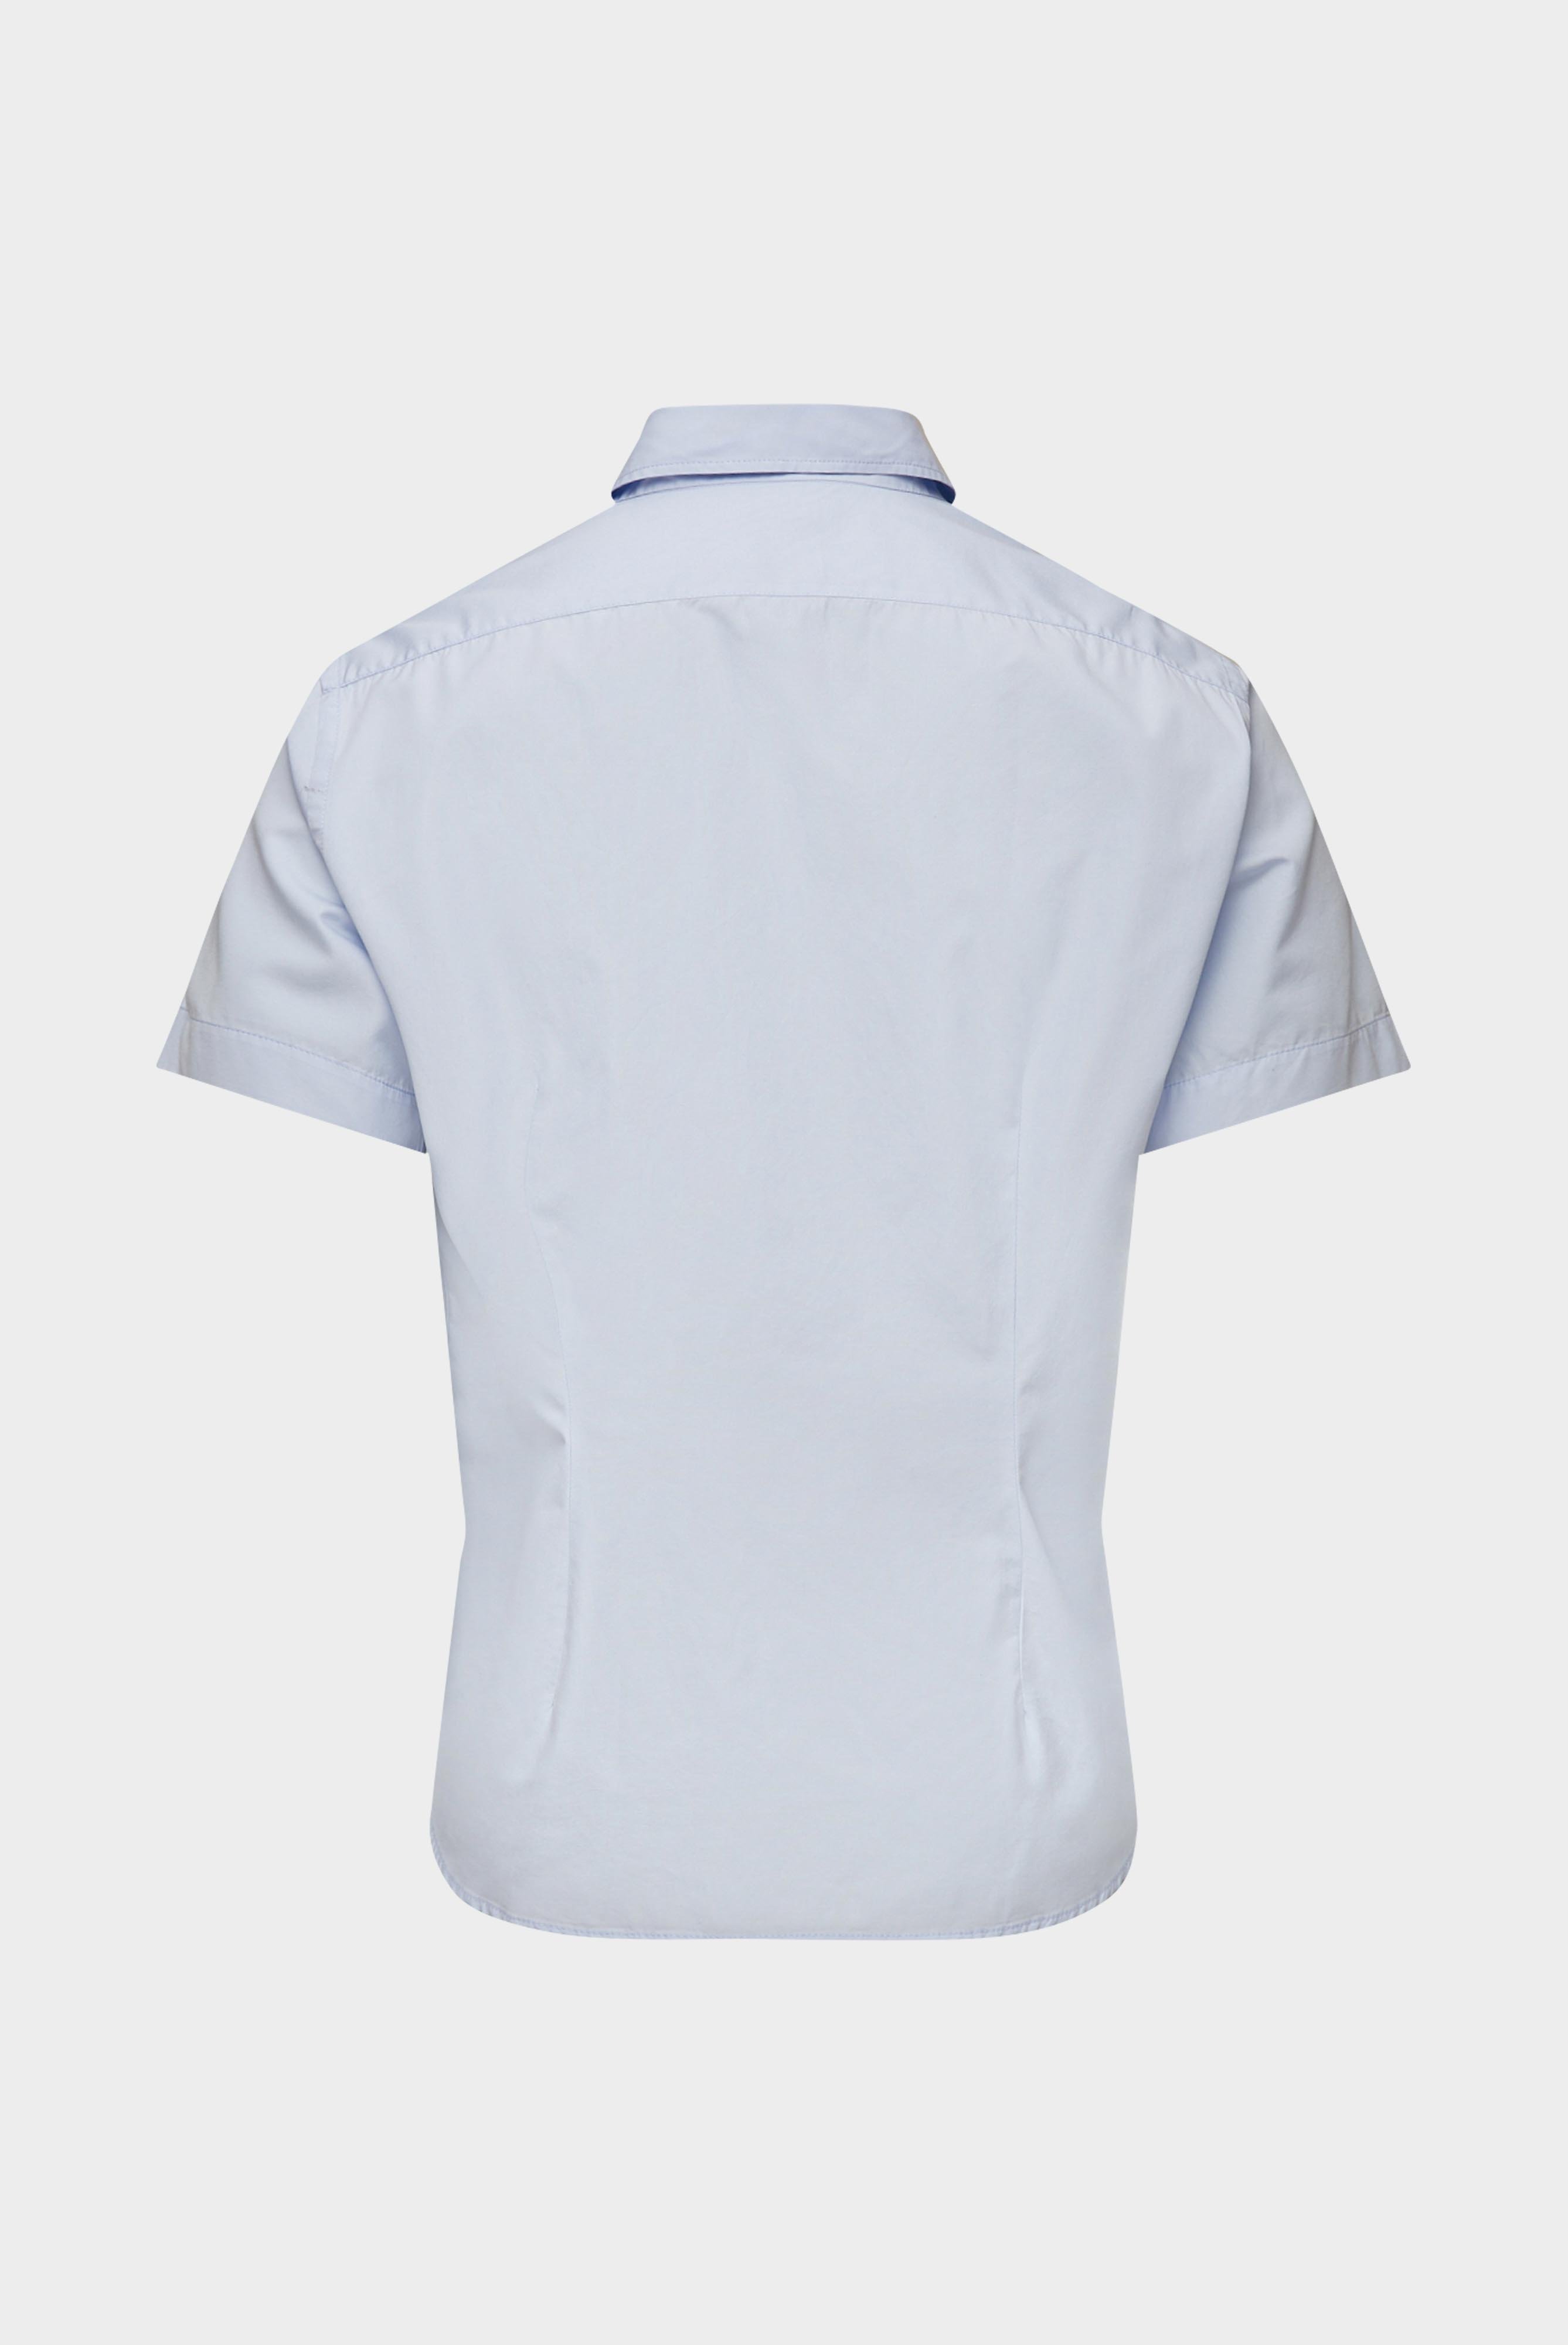 Casual Hemden+Kurzarm Hemd aus Baumwollpopeline+20.2053.Q2.130648.715.39